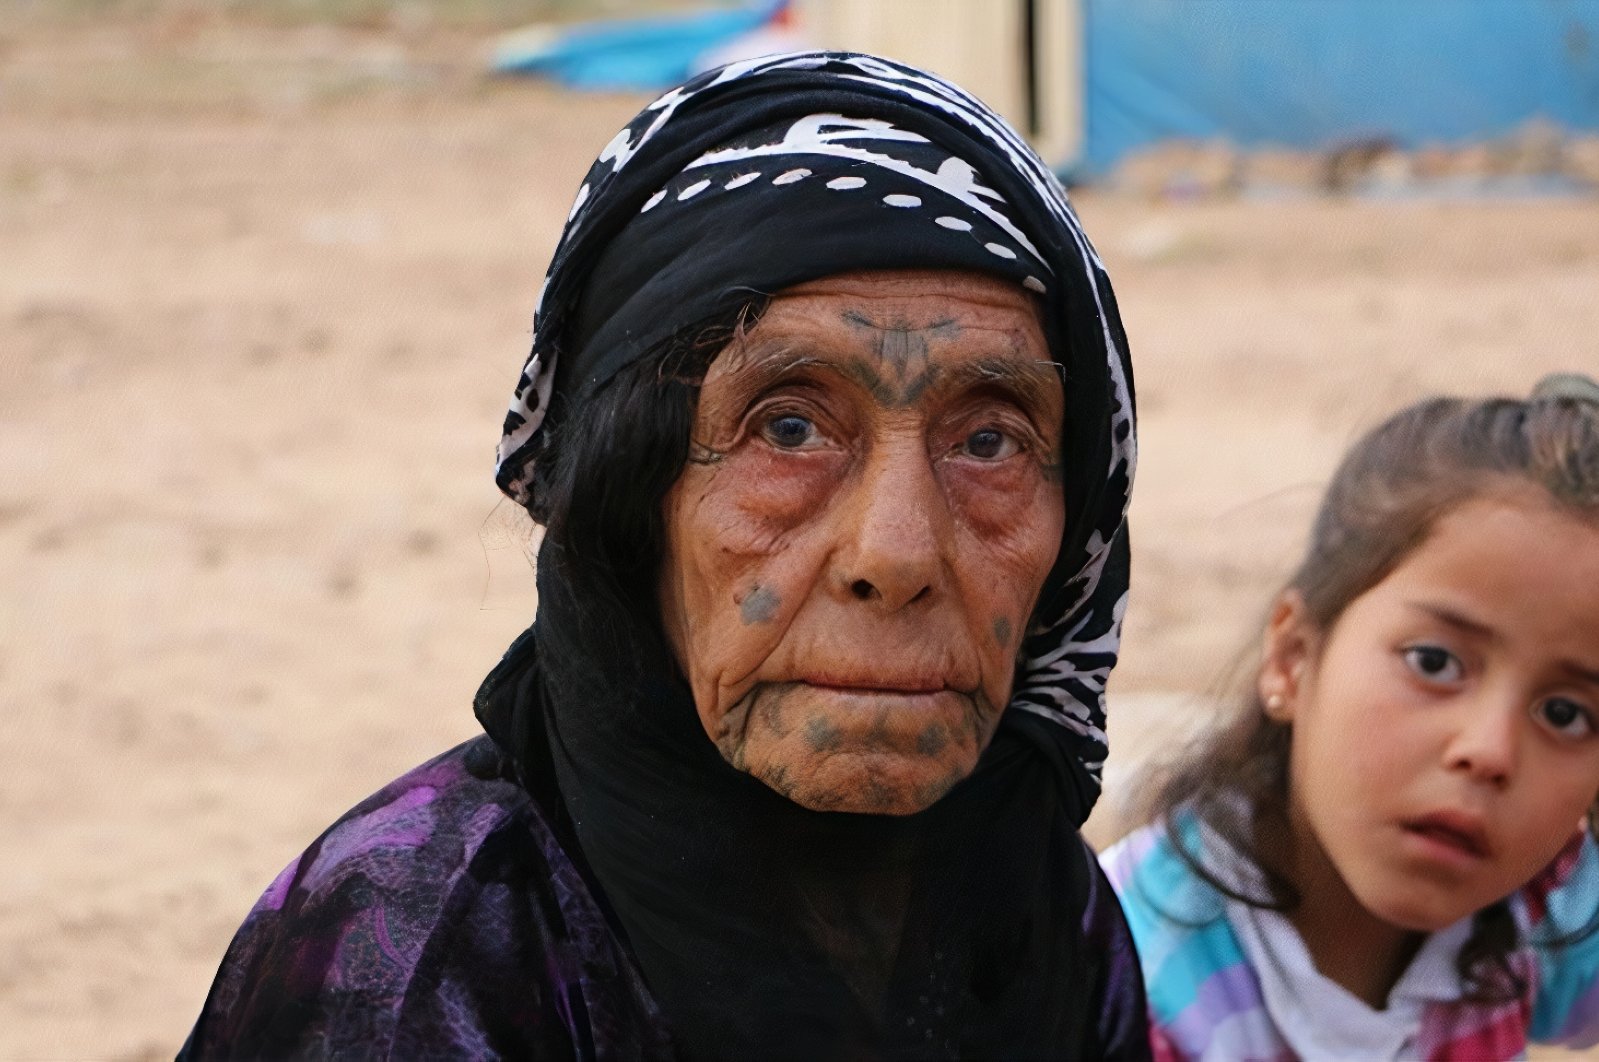 Sabha al-Aswad, an 85-year-old Syrian refugee woman, poses with her granddaughter, in Şanlıurfa, southeastern Turkey, May 6, 2017. (AA PHOTO)